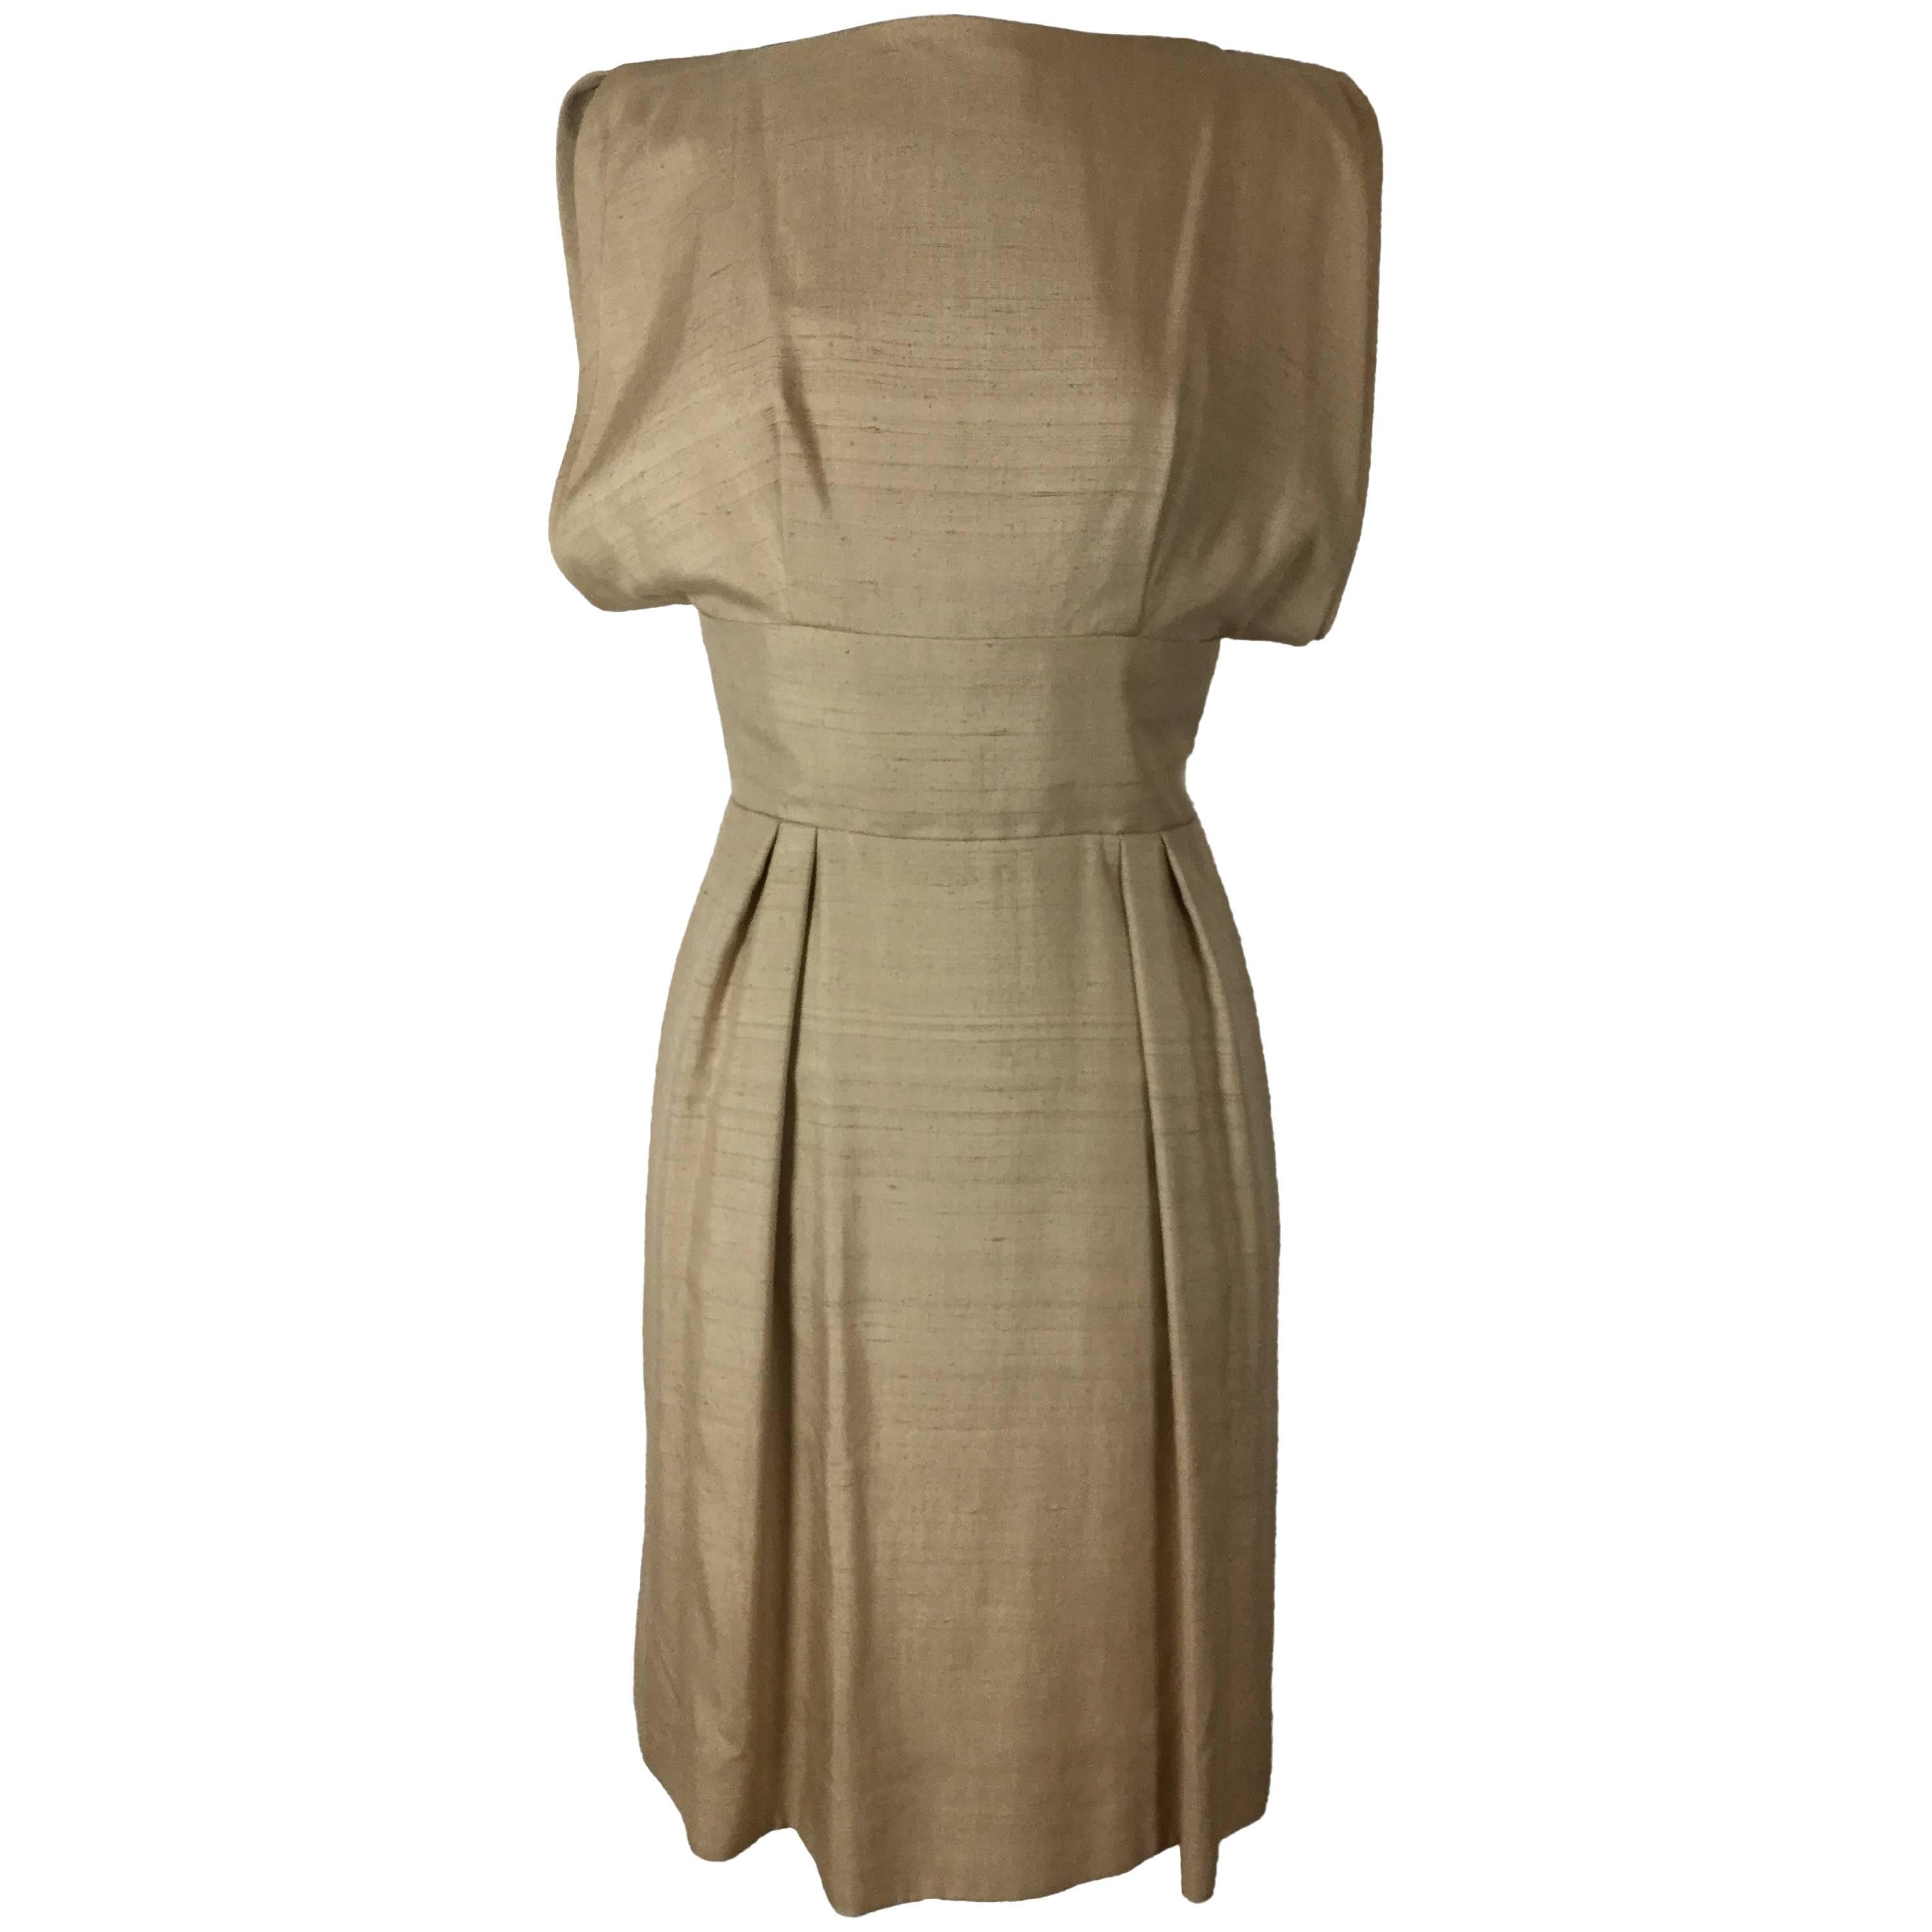 Teal Traina Raw Silk Dress .   Early 1960's.